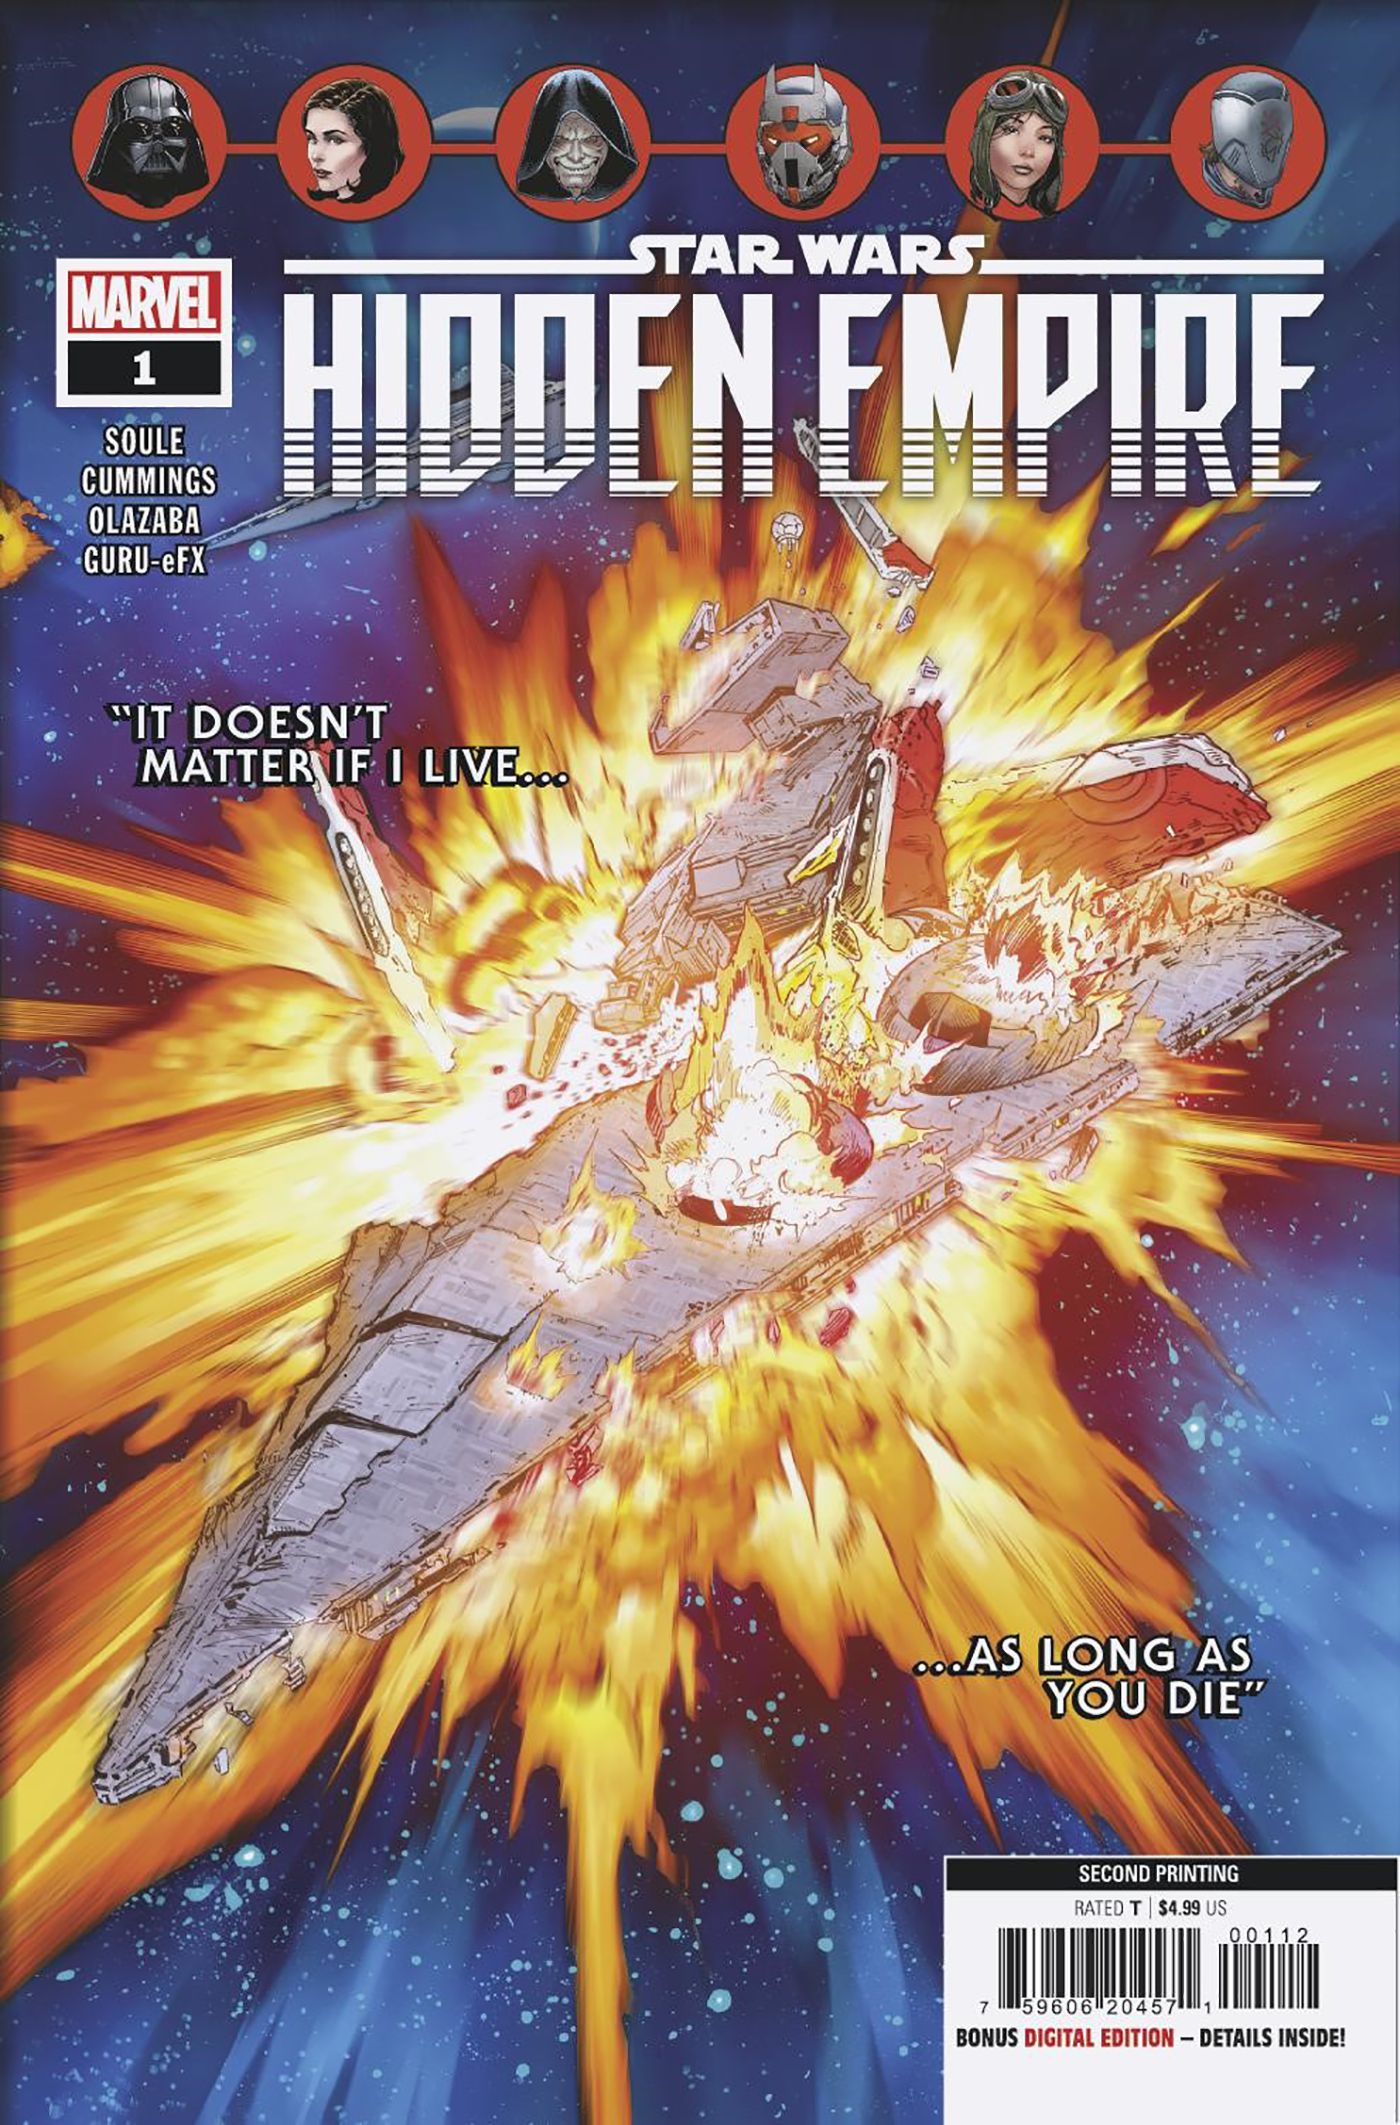 Star Wars: Hidden Empire (MS 5)